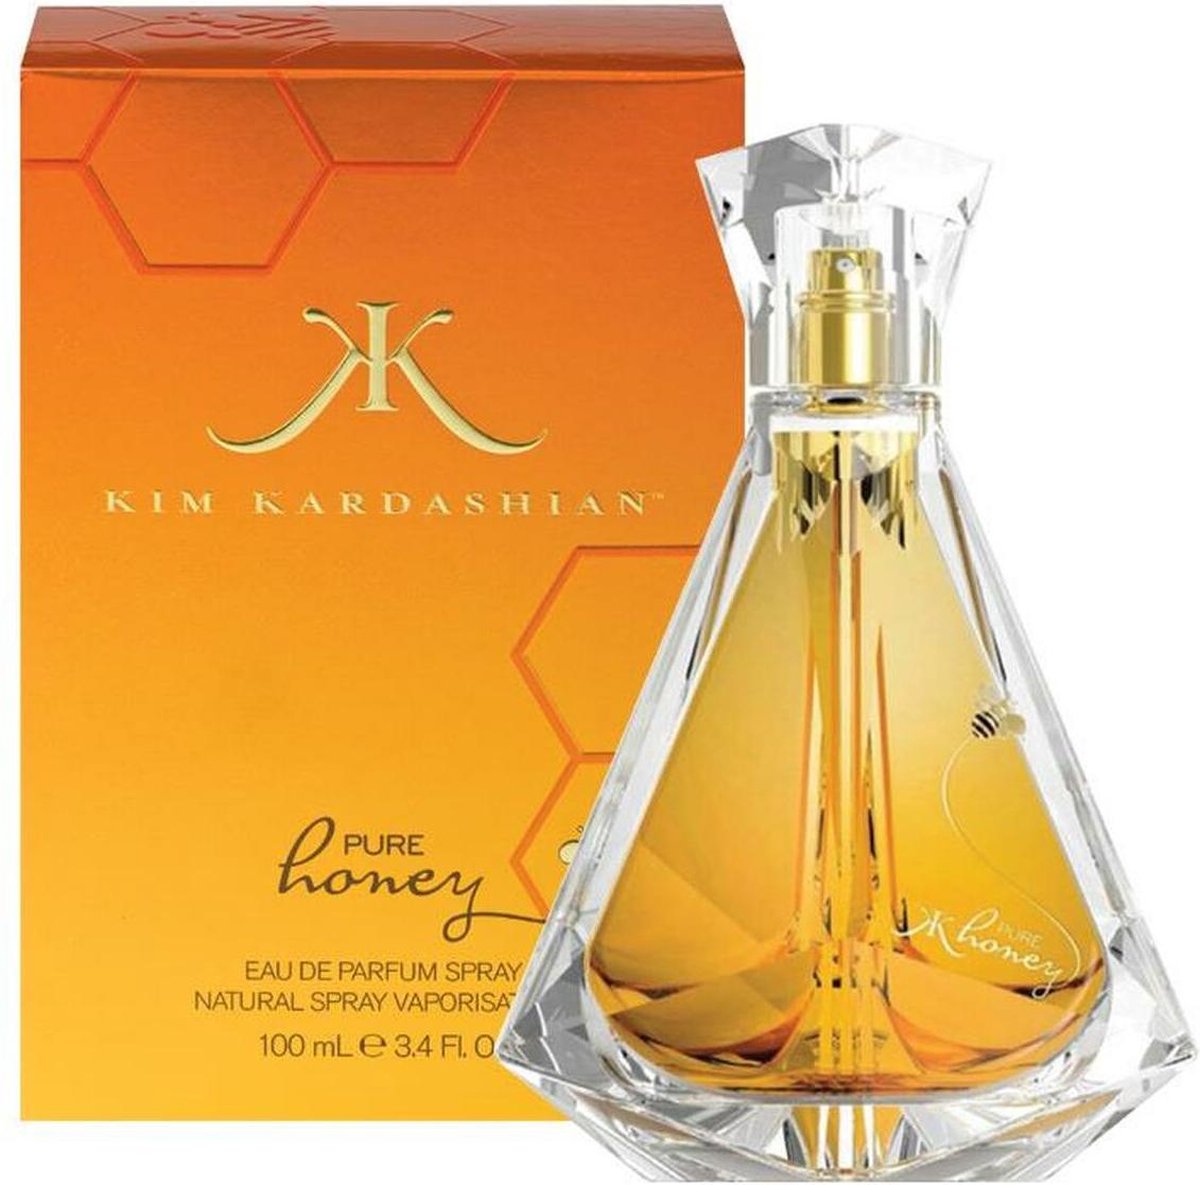 Kim Kardashian Pure Honey - 100ml - Eau de parfum